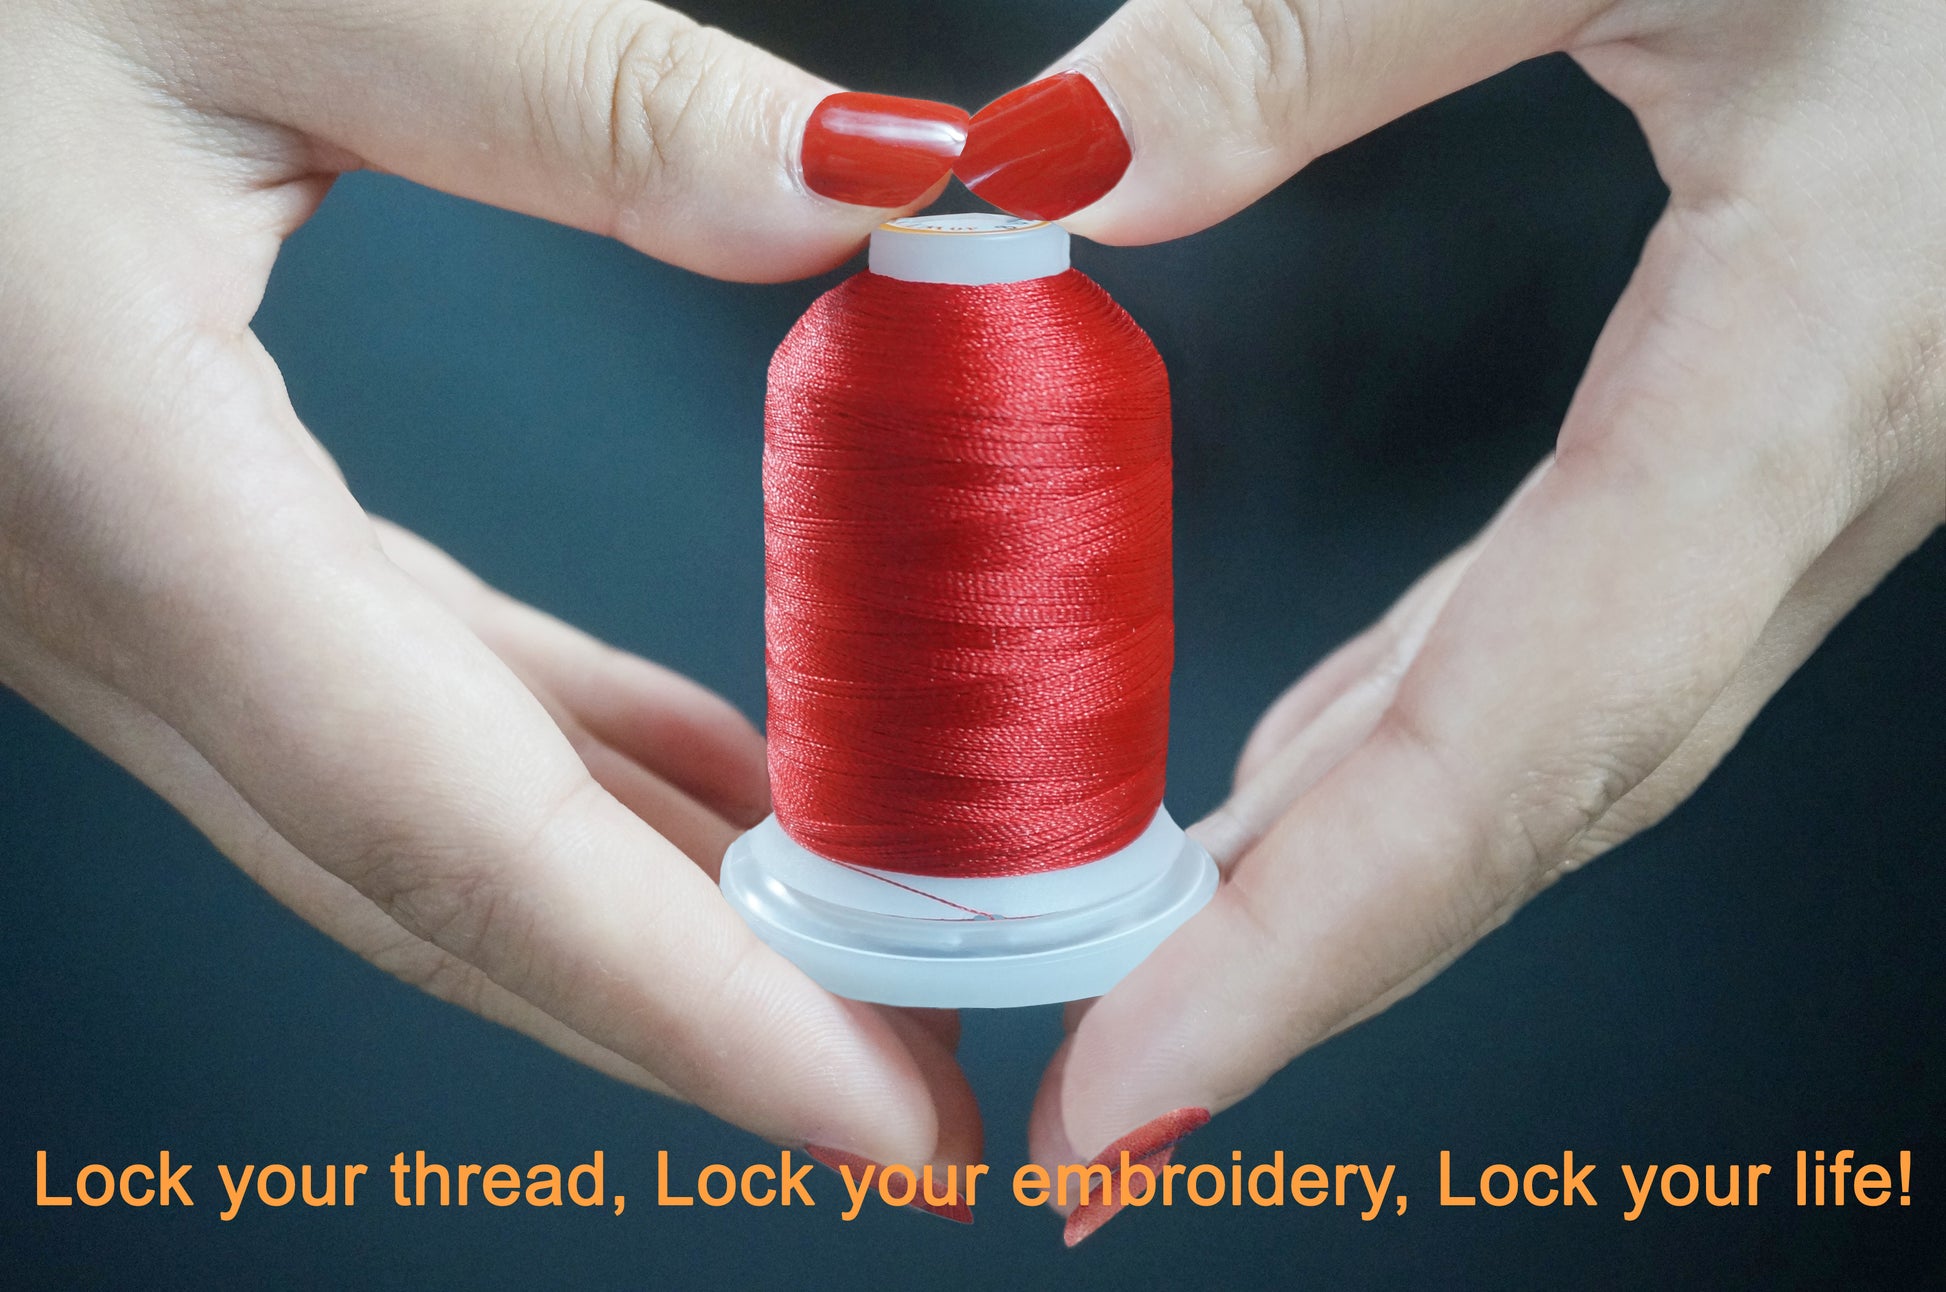 New Brothread 60 Spools Wooden Thread Rack / Thread Holder Organizer w –  New brothread